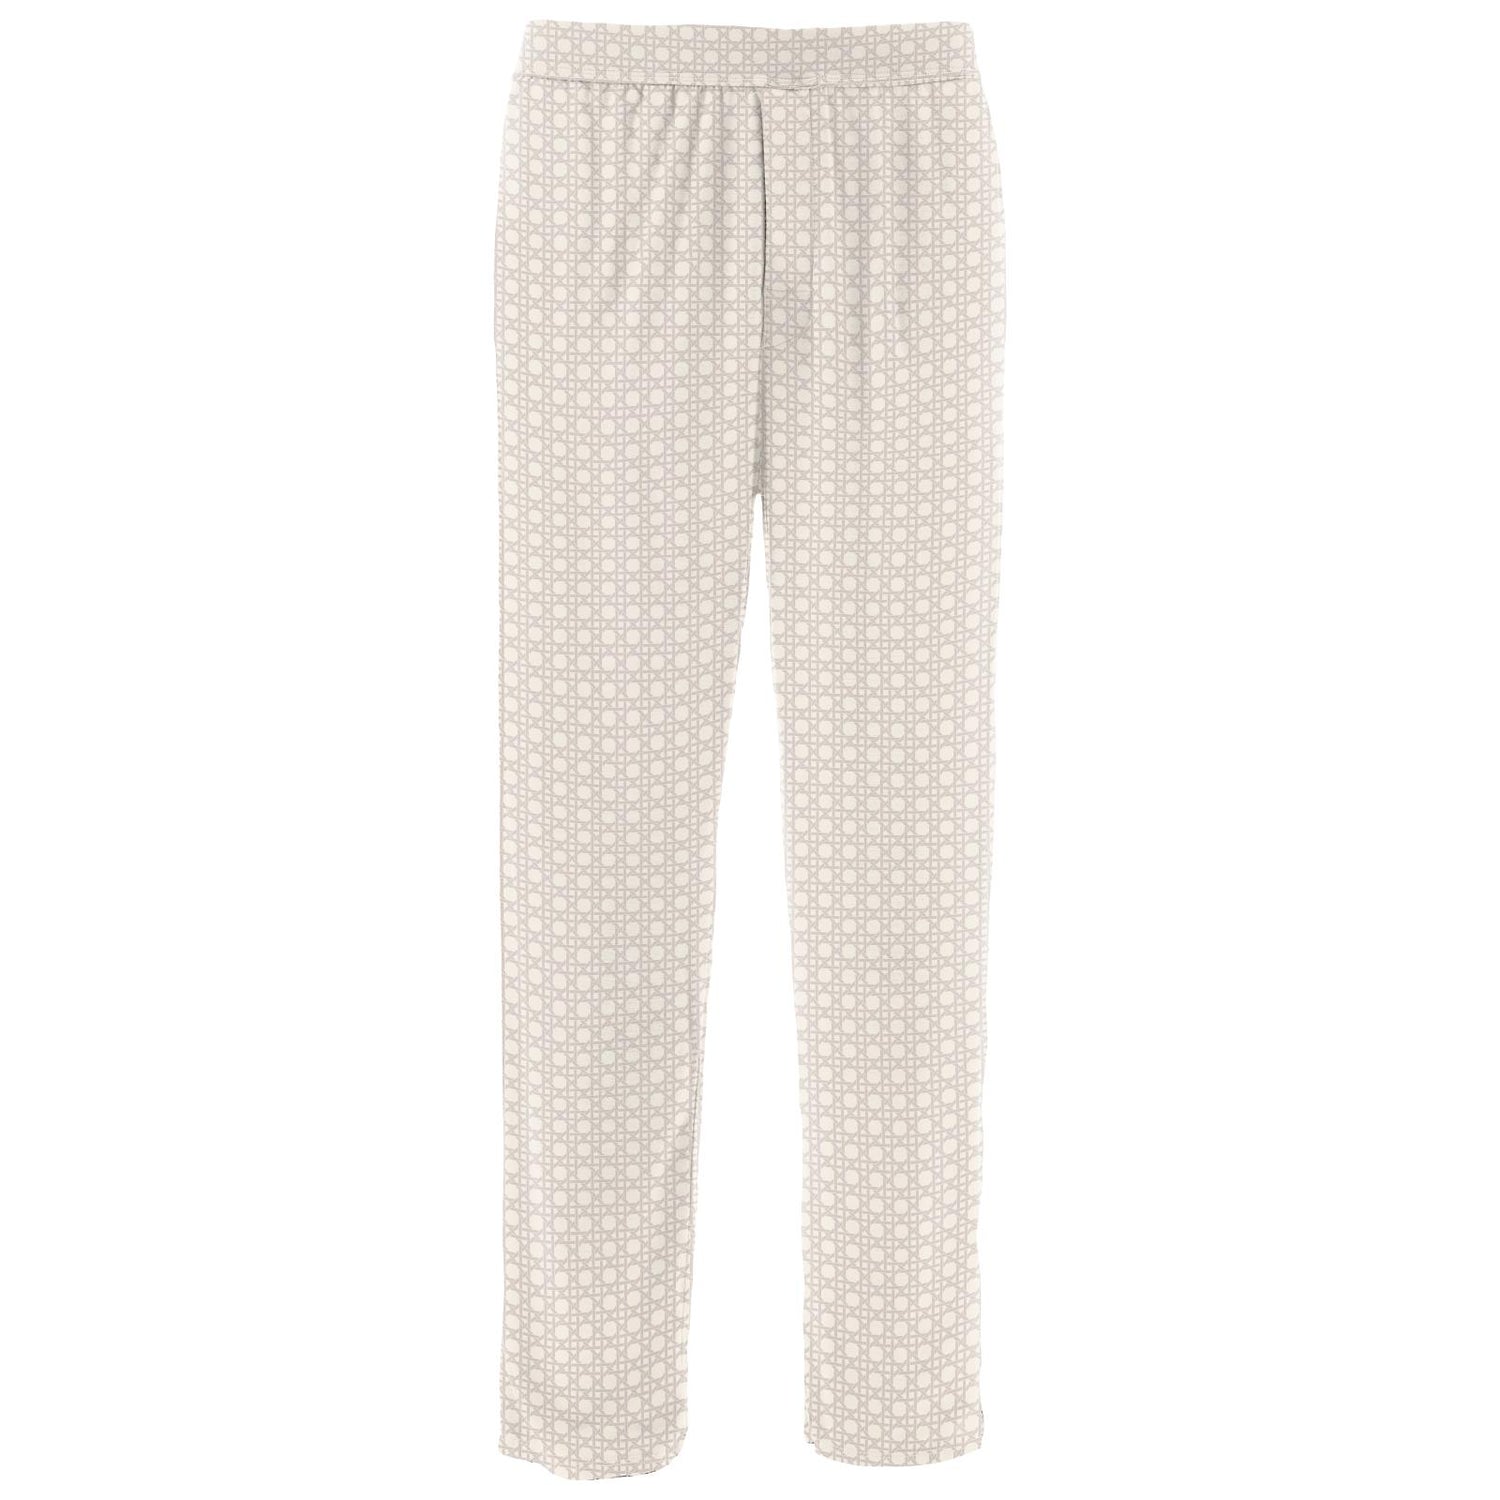 Men's Print Pajama Pants in Latte Wicker